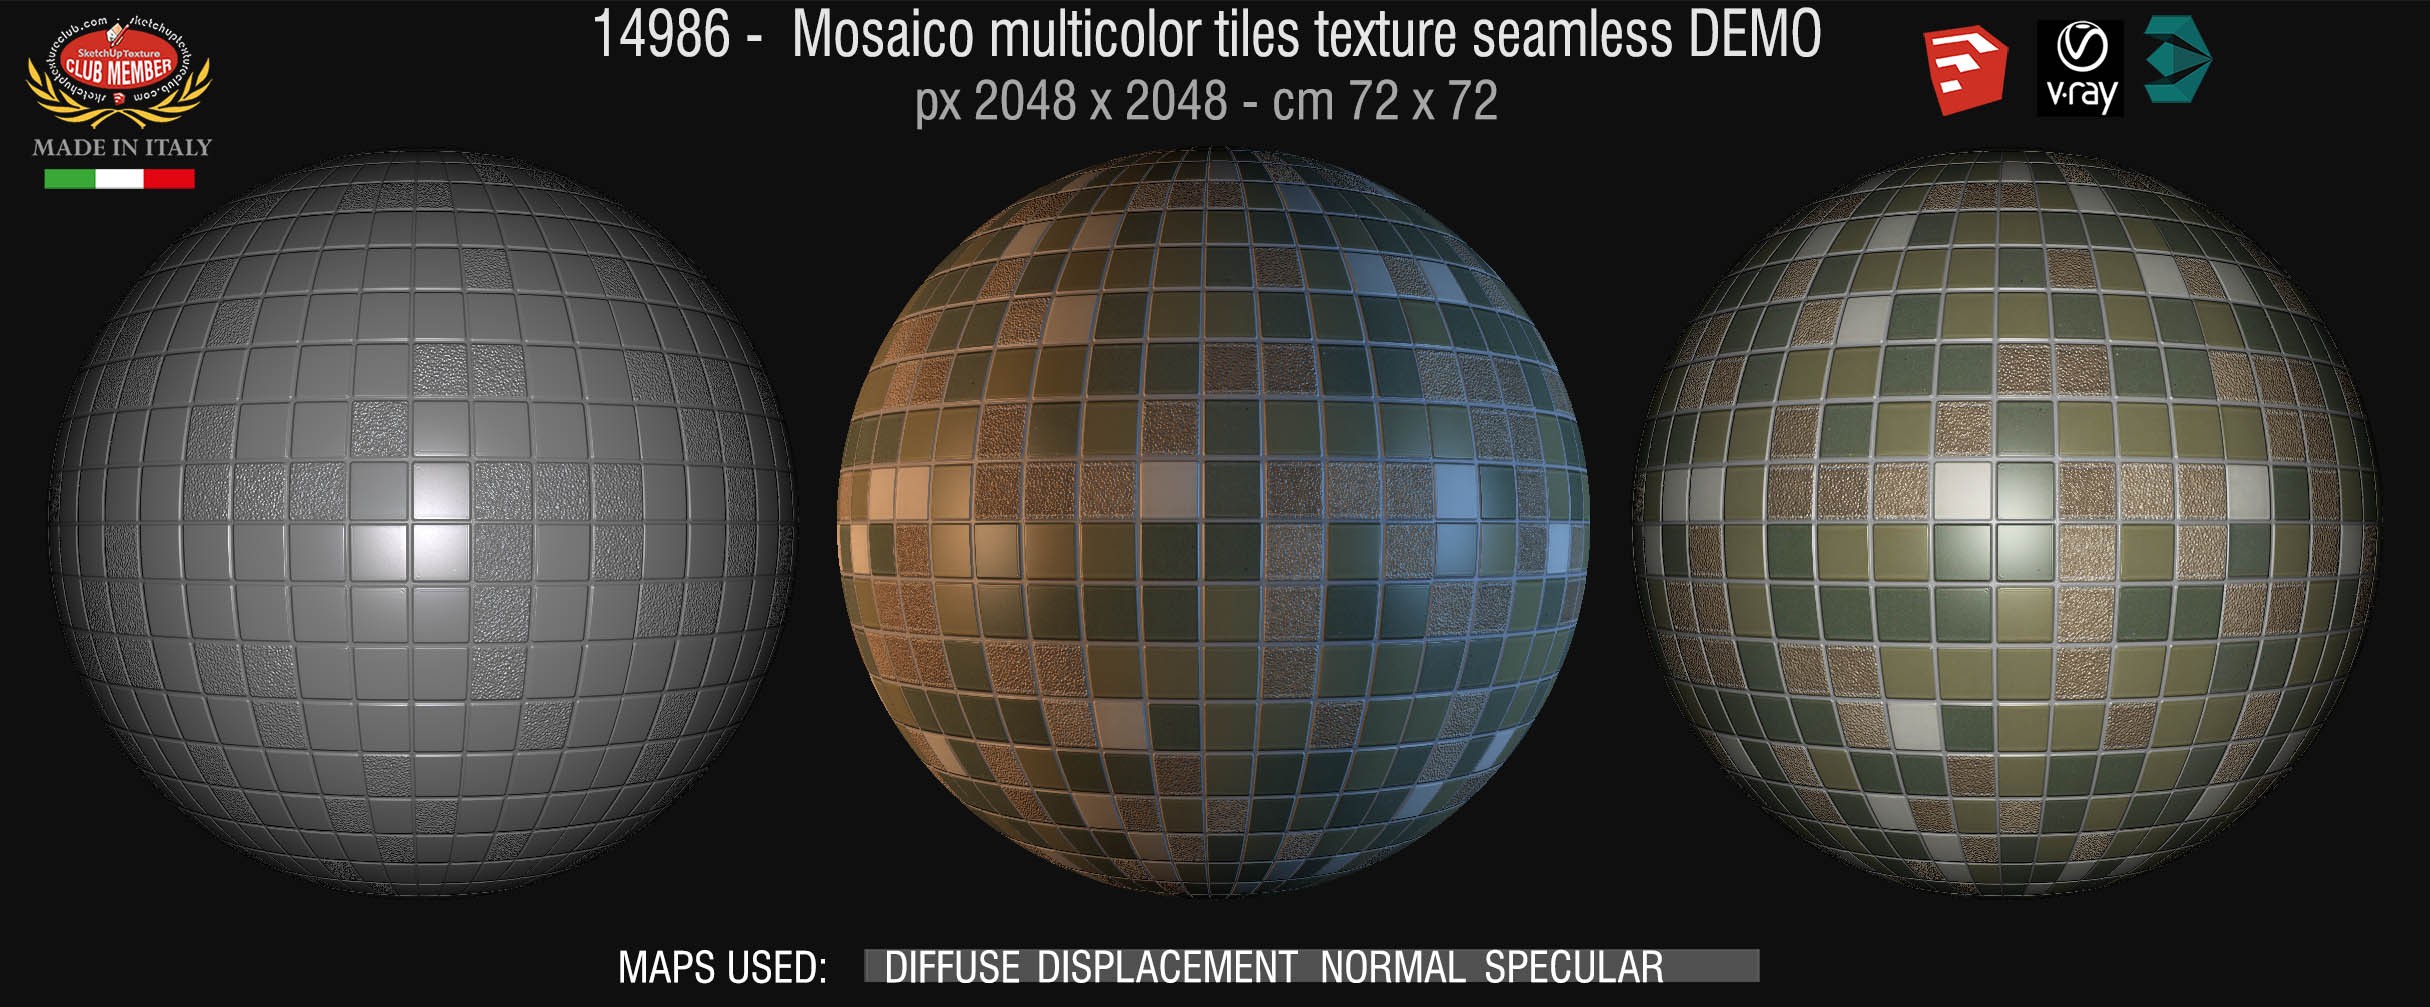 14986 Mosaico multicolor tiles texture seamless + maps DEMO